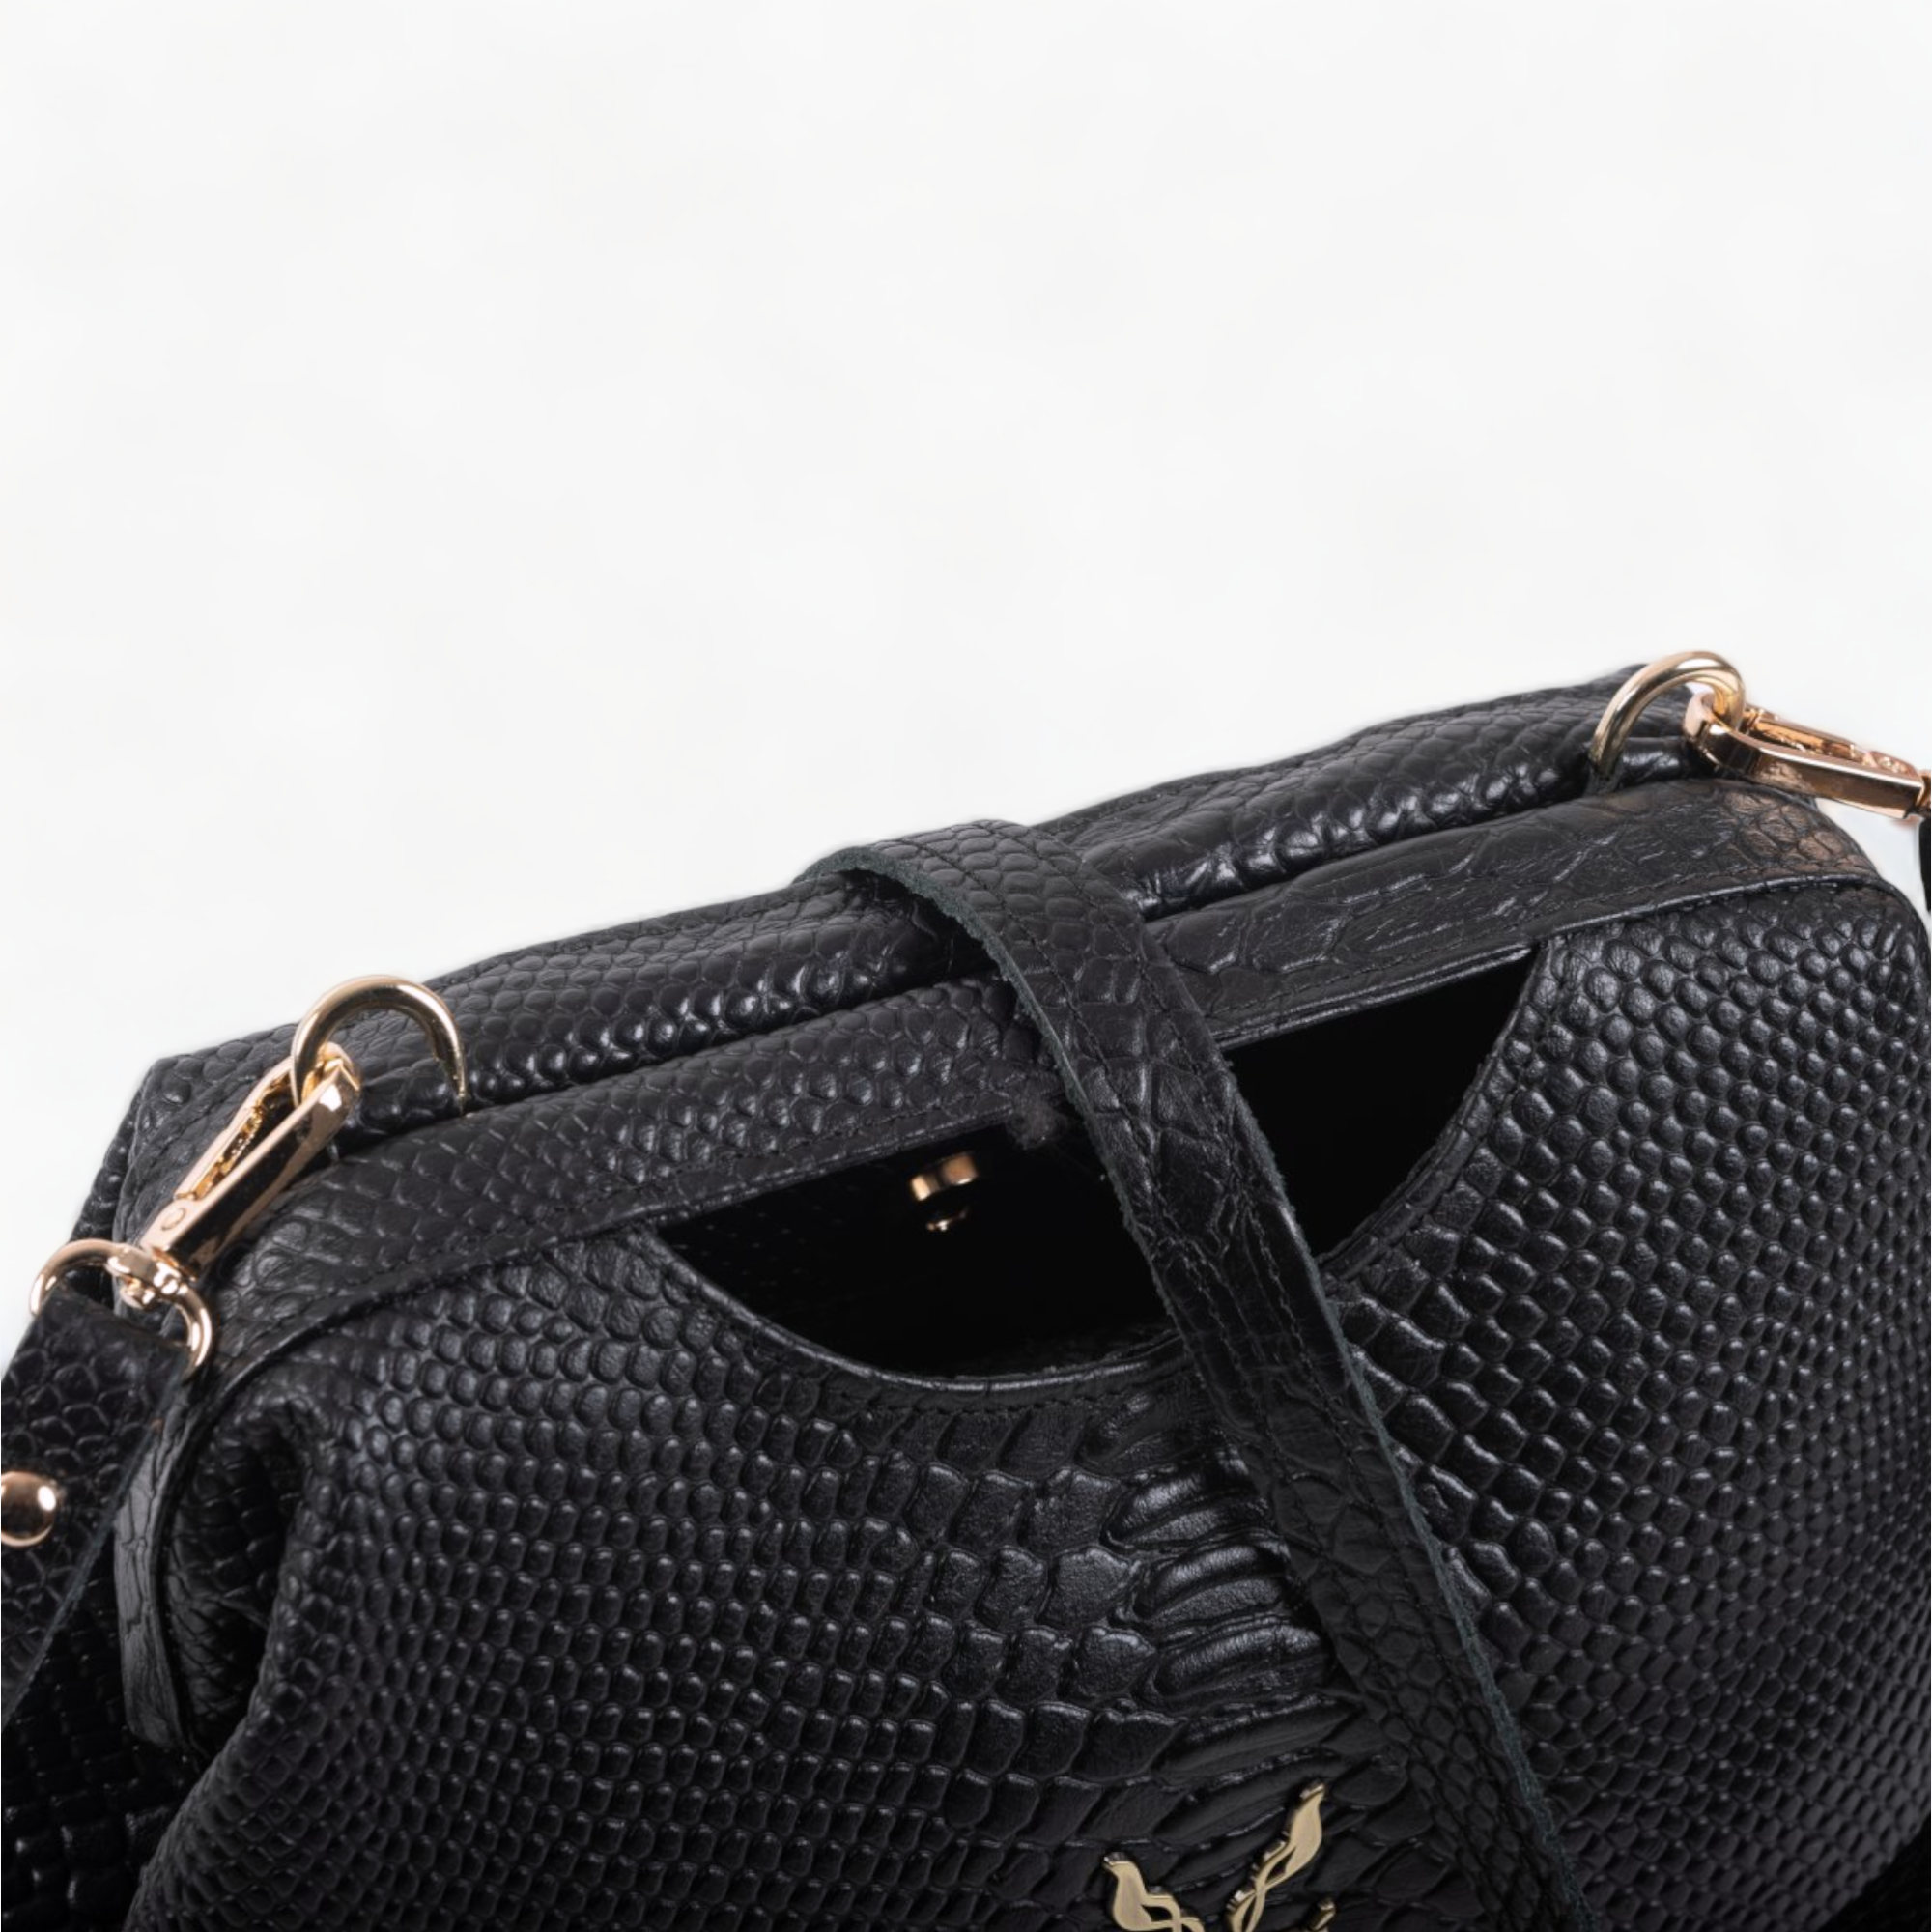 Leather black handbag